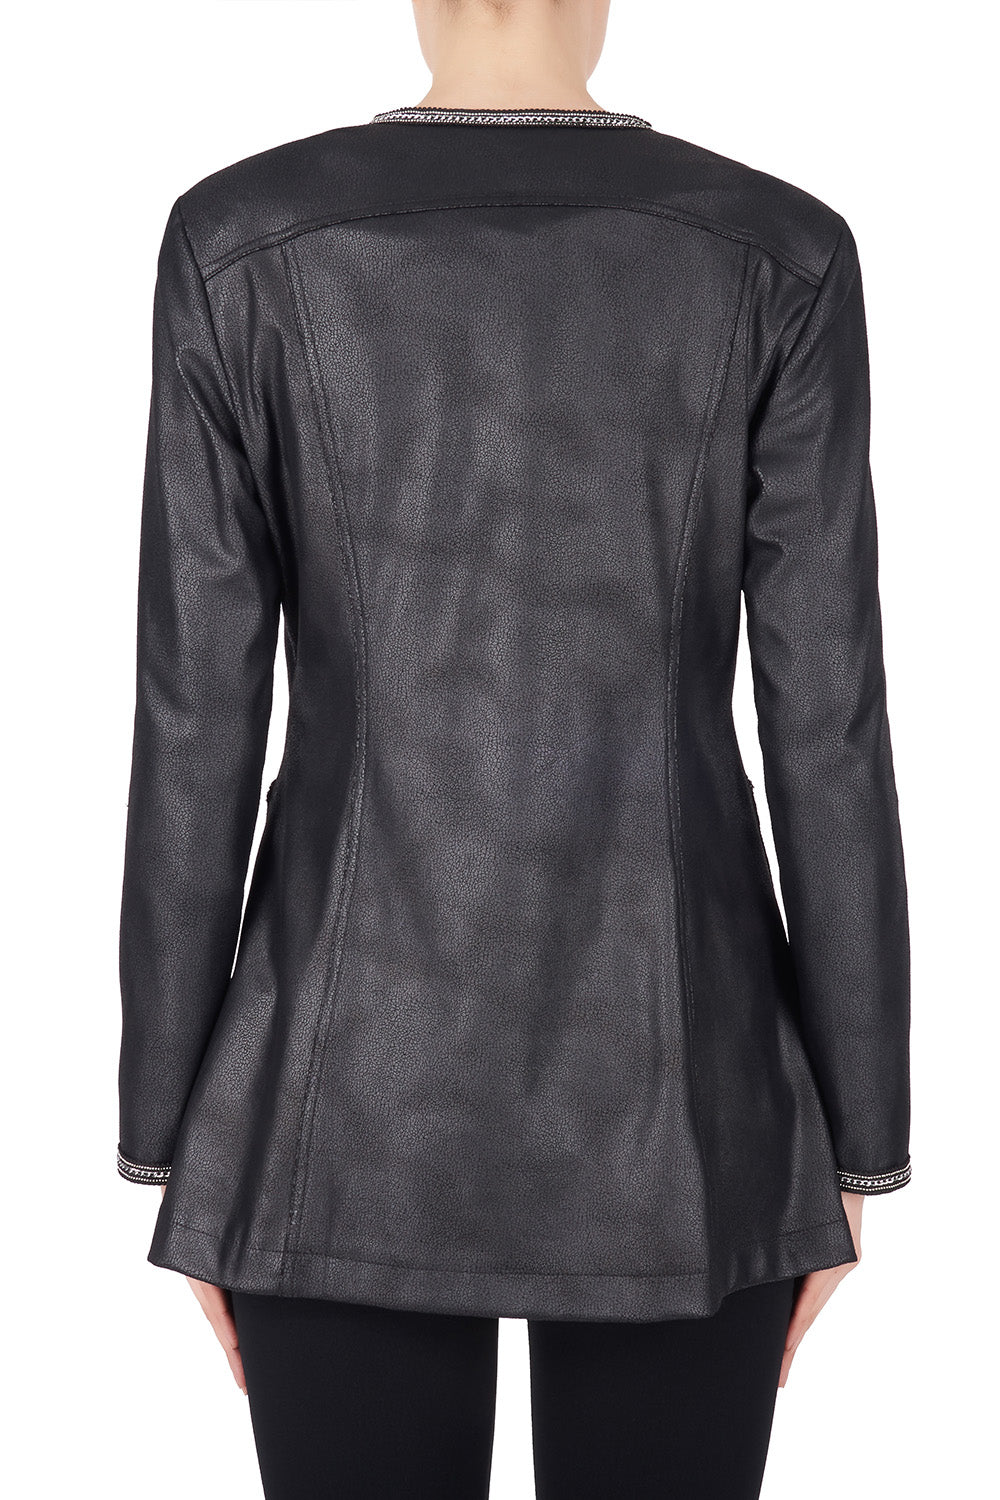 Joseph Ribkoff Black Jacket Style 184381